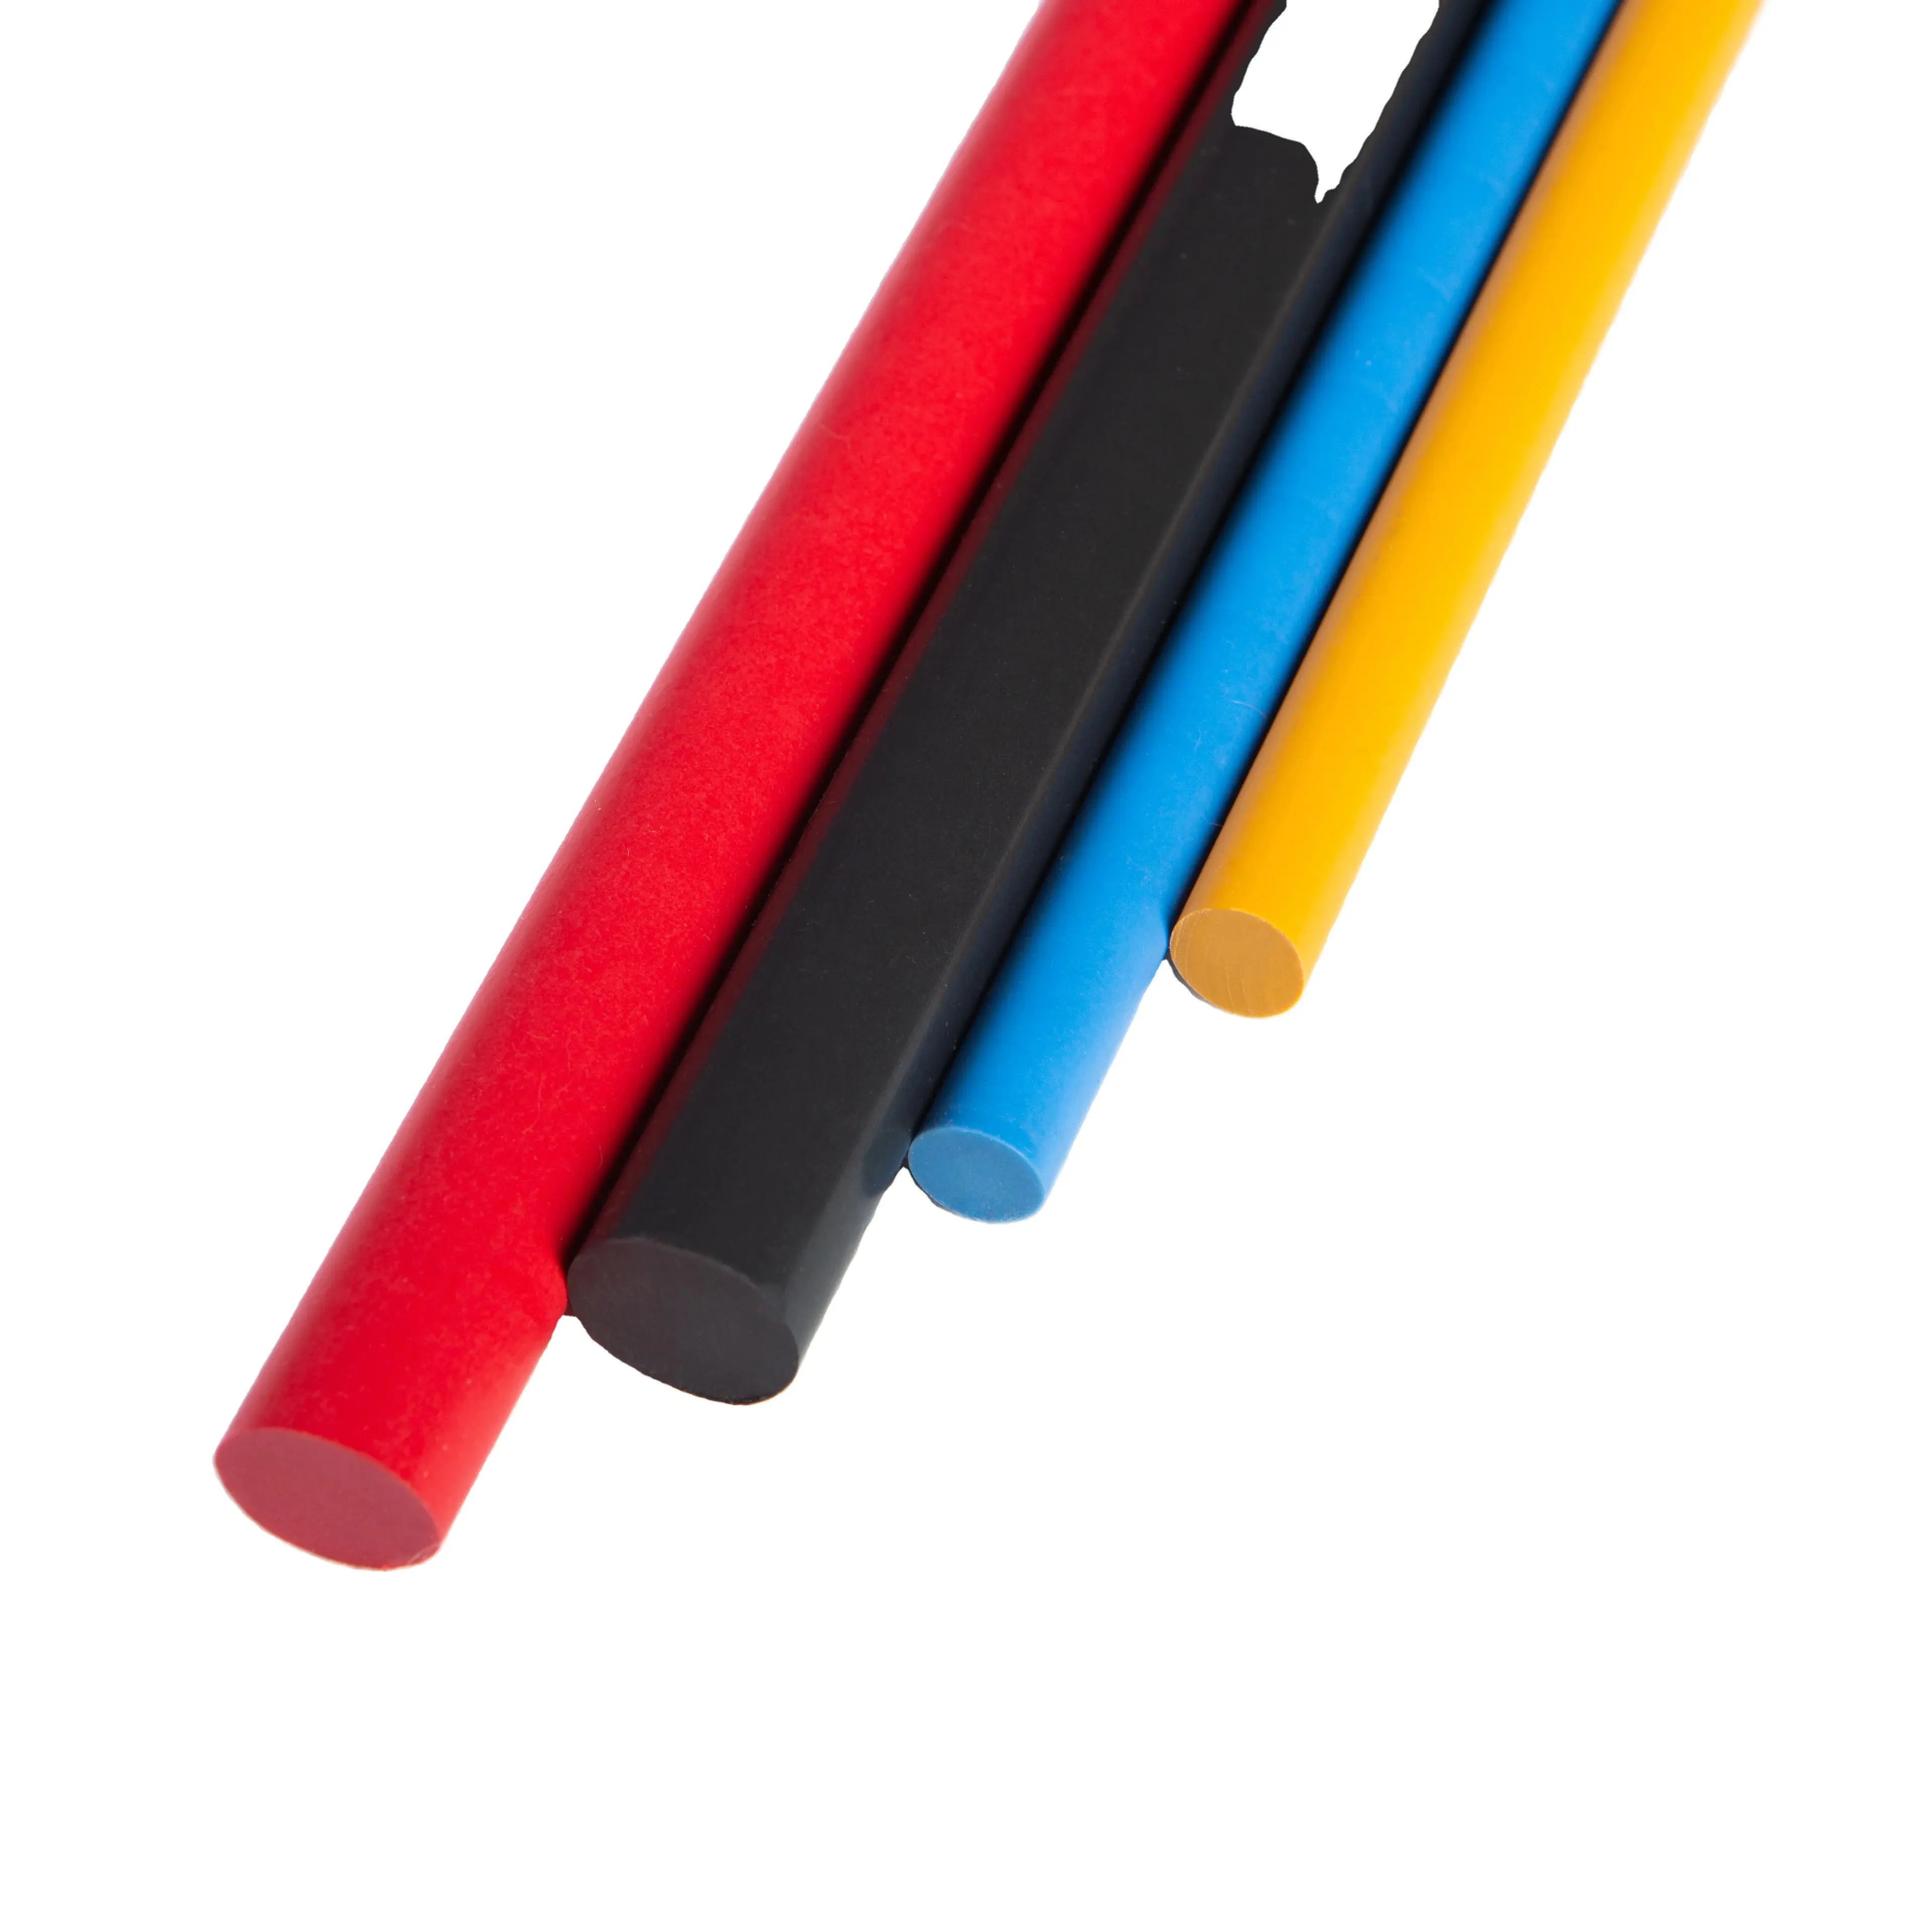 Pabrik profesional menawarkan batang ptfe tahan suhu tinggi bar ptfe warna-warni